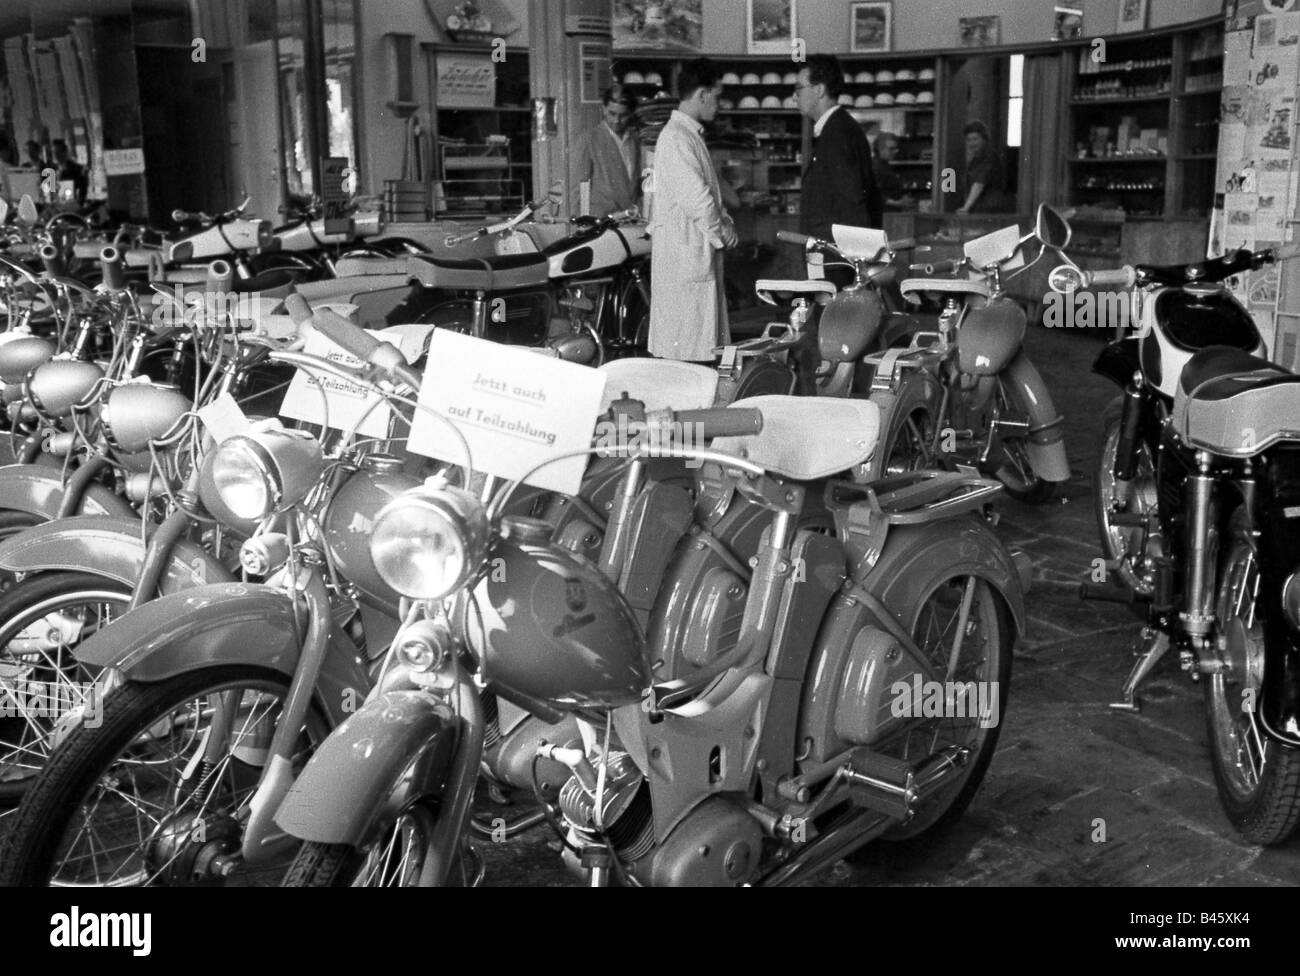 Transporte/transporte, motocicleta, ciclomotor SR2E de la empresa Simson/Suhl, en una tienda, 1963 de julio, Foto de stock